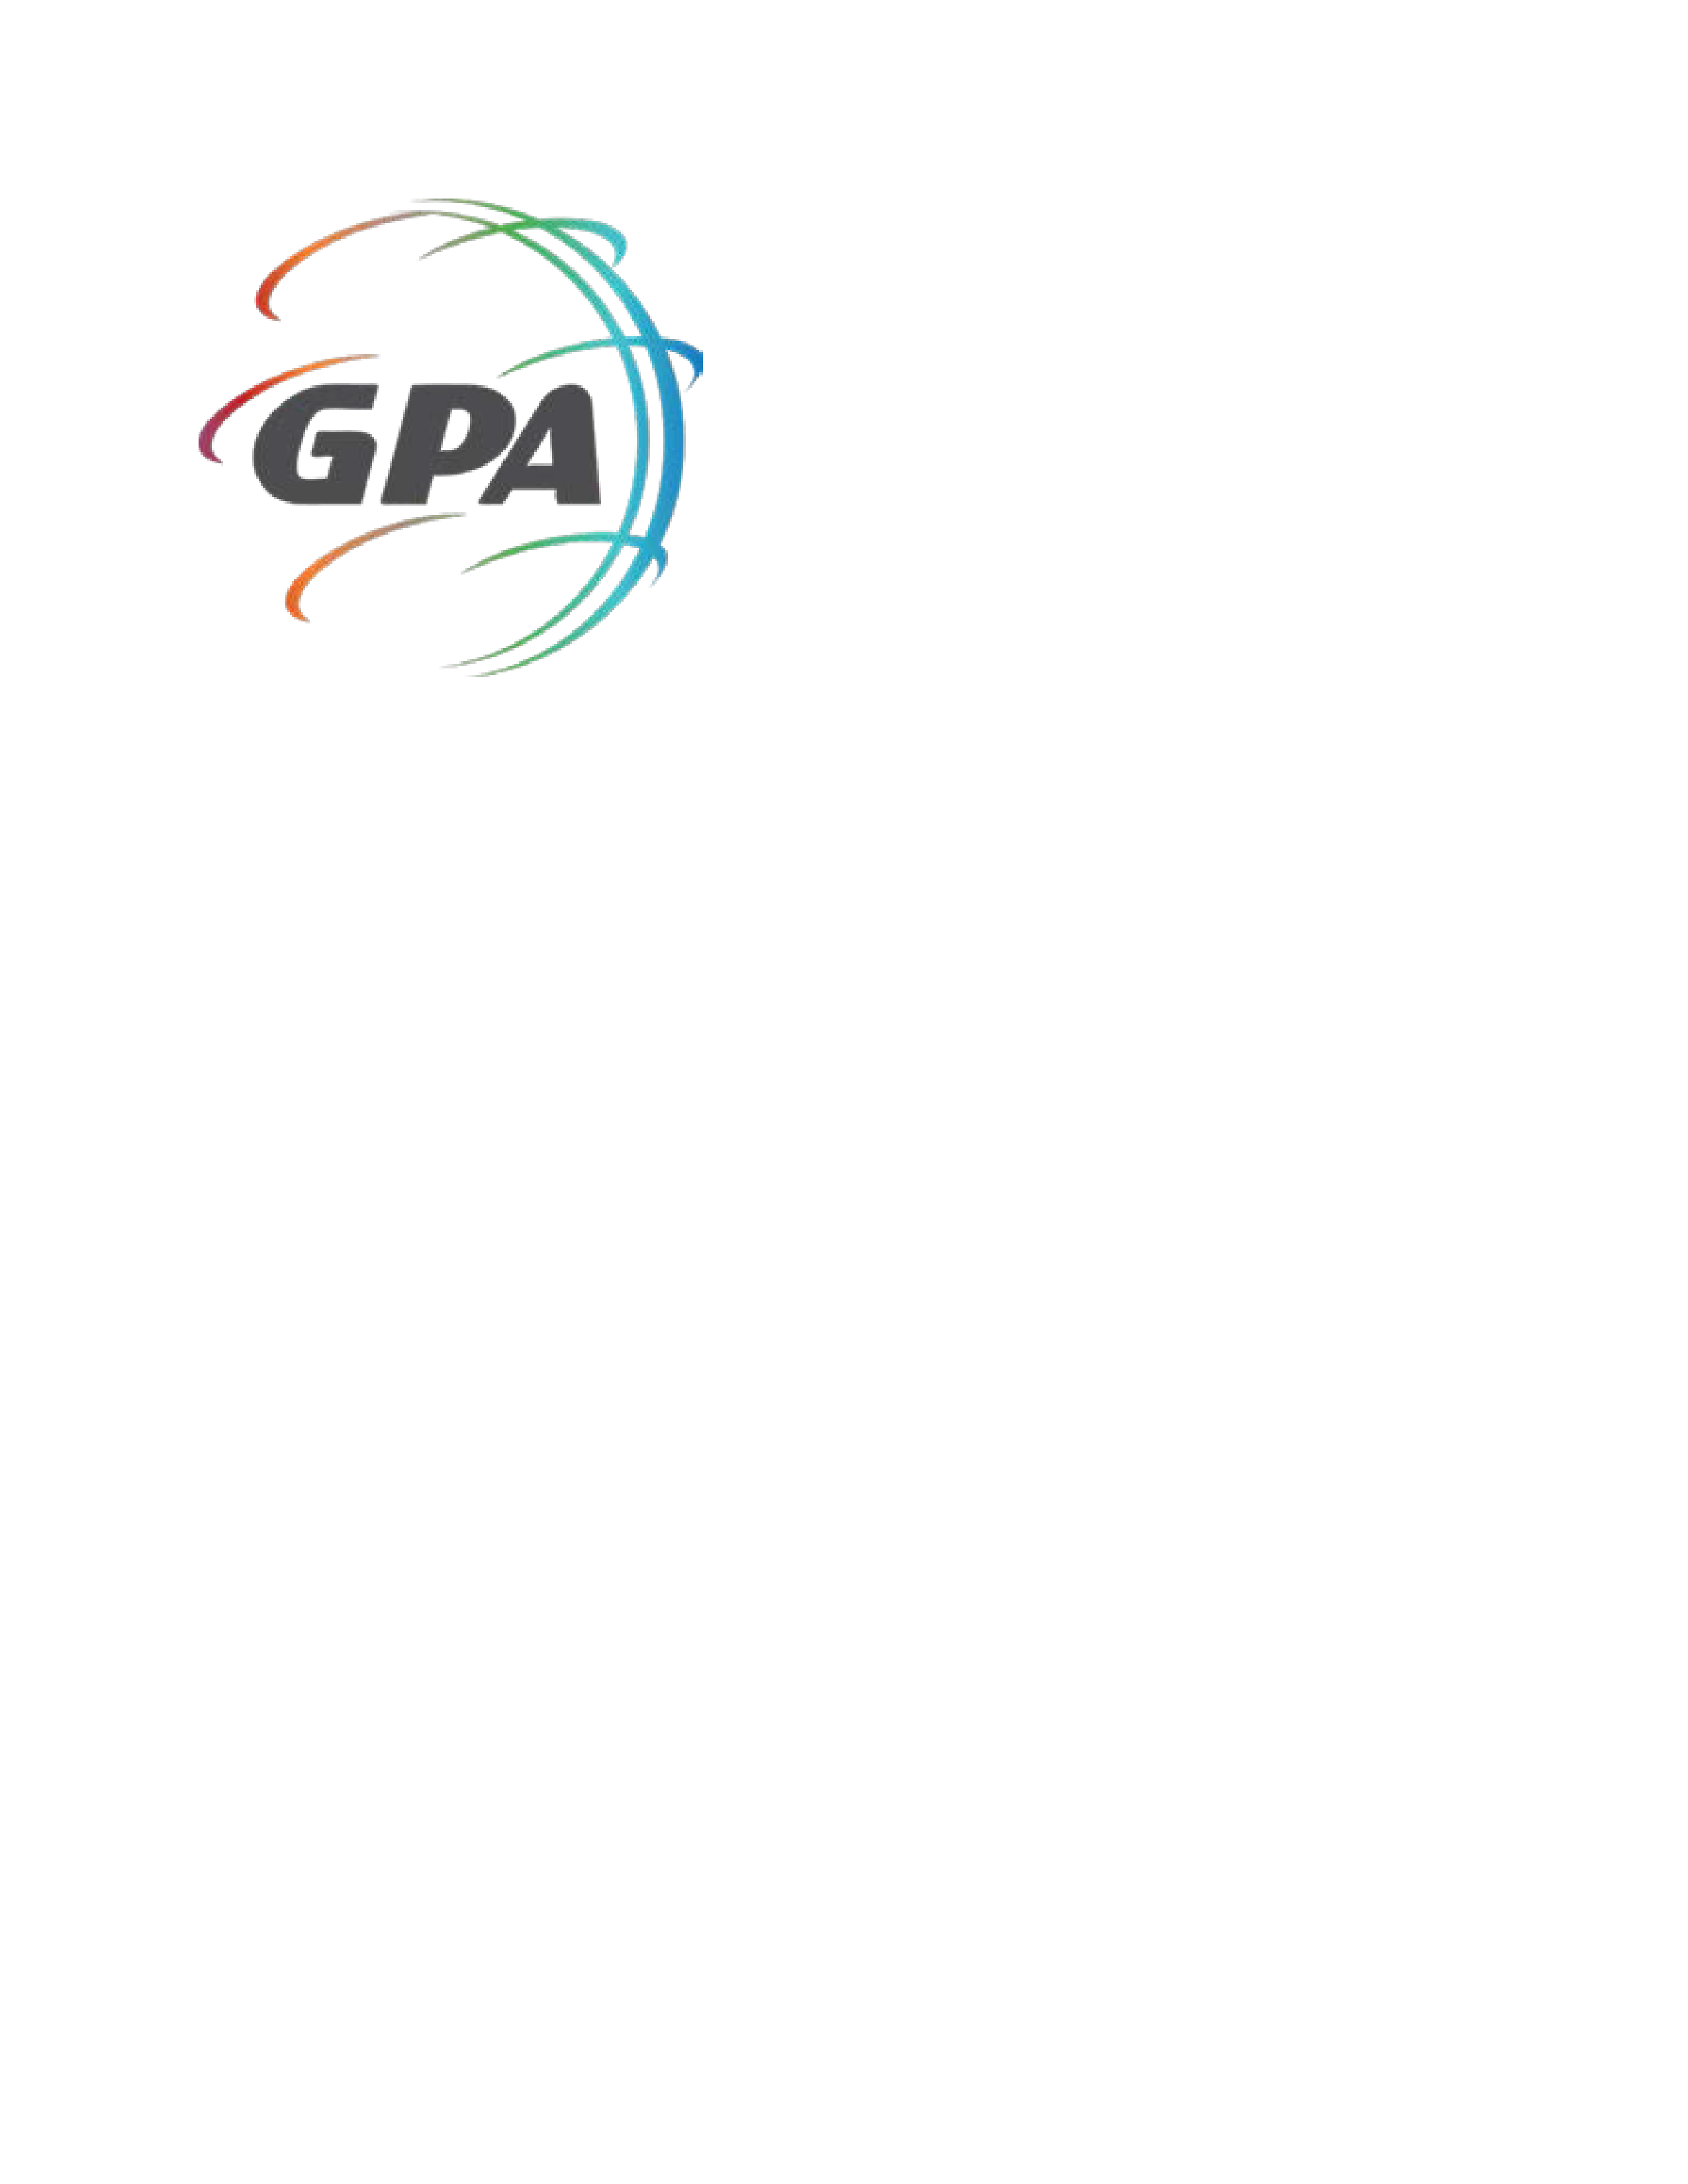 Group & Pension Administrators, Inc., dba GPA logo